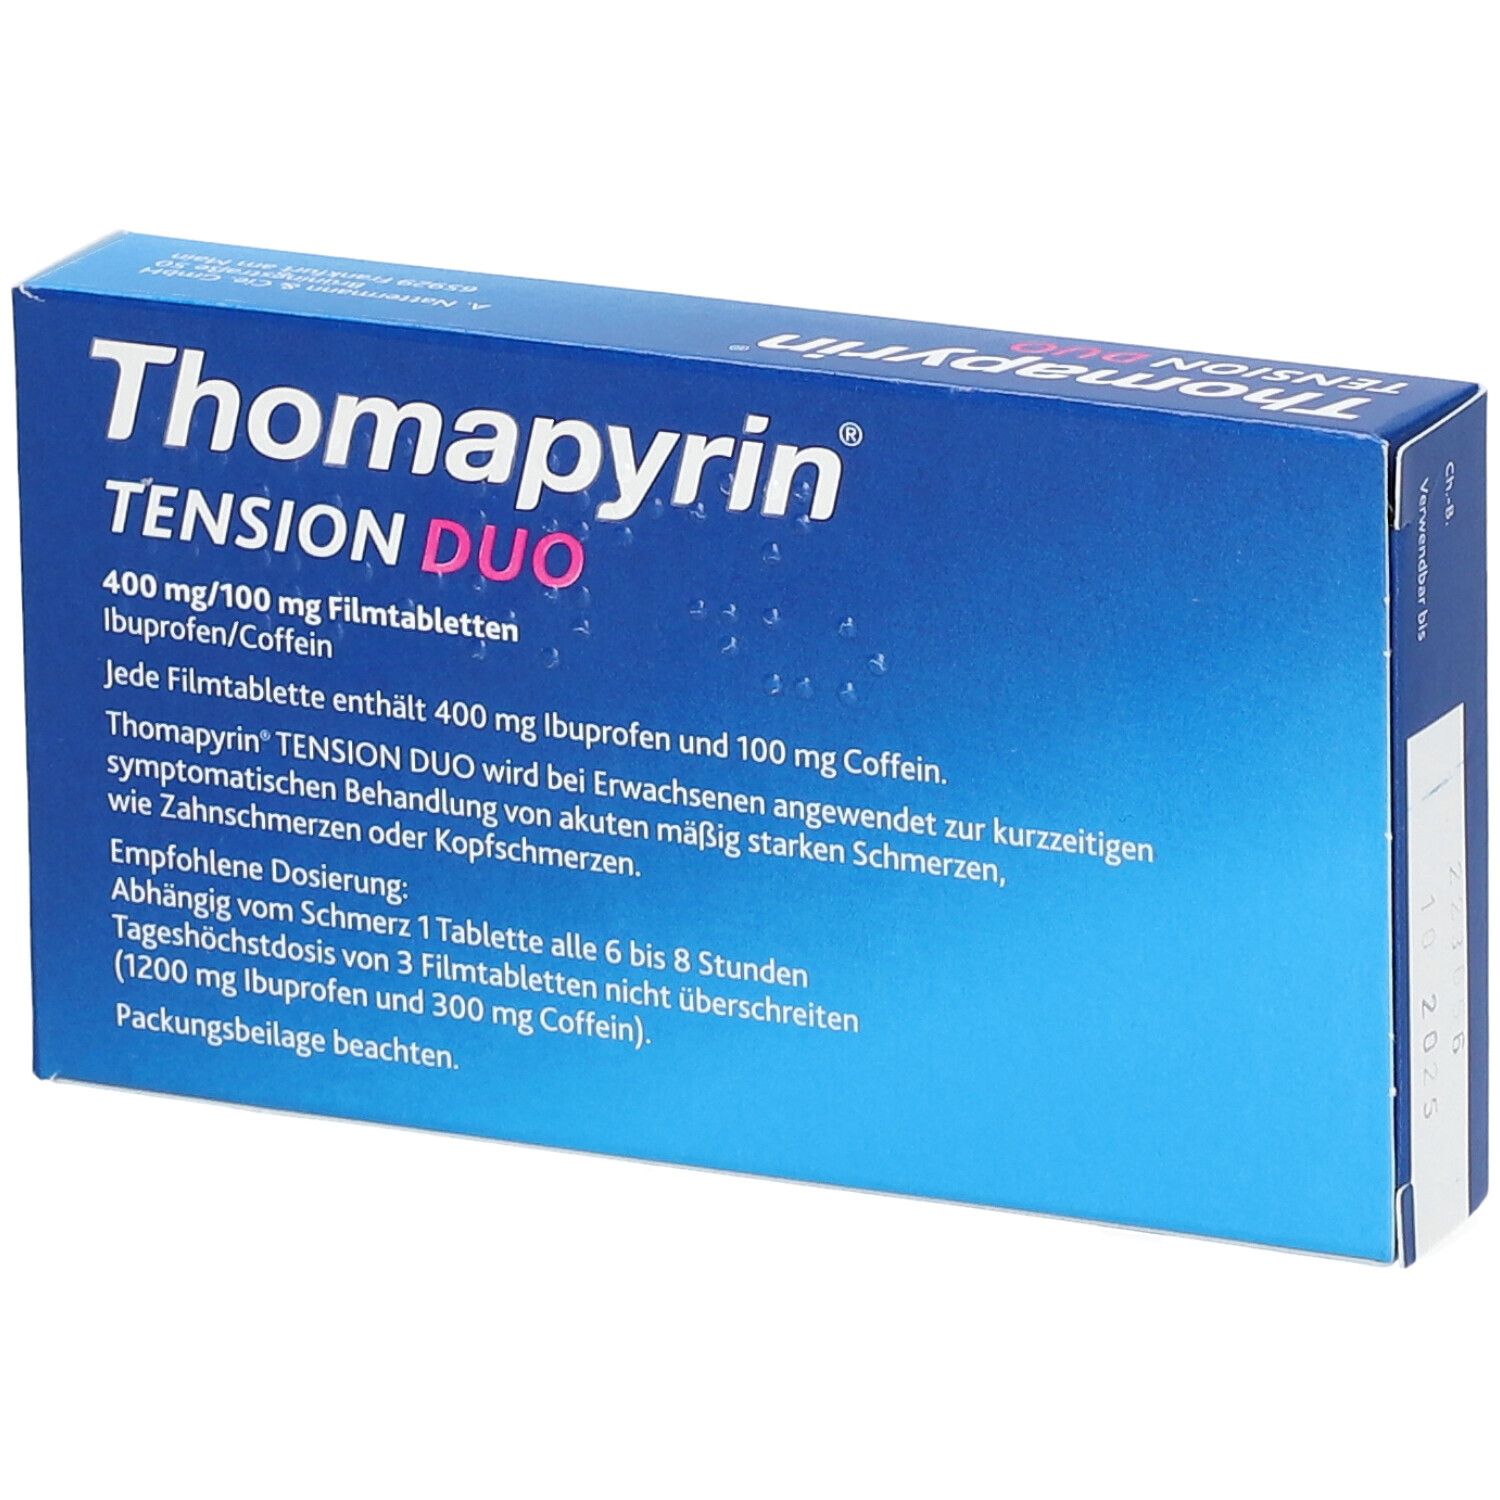 Thomapyrin TENSION DUO bei Kopfschmerzen: Ibuprofen/Coffein